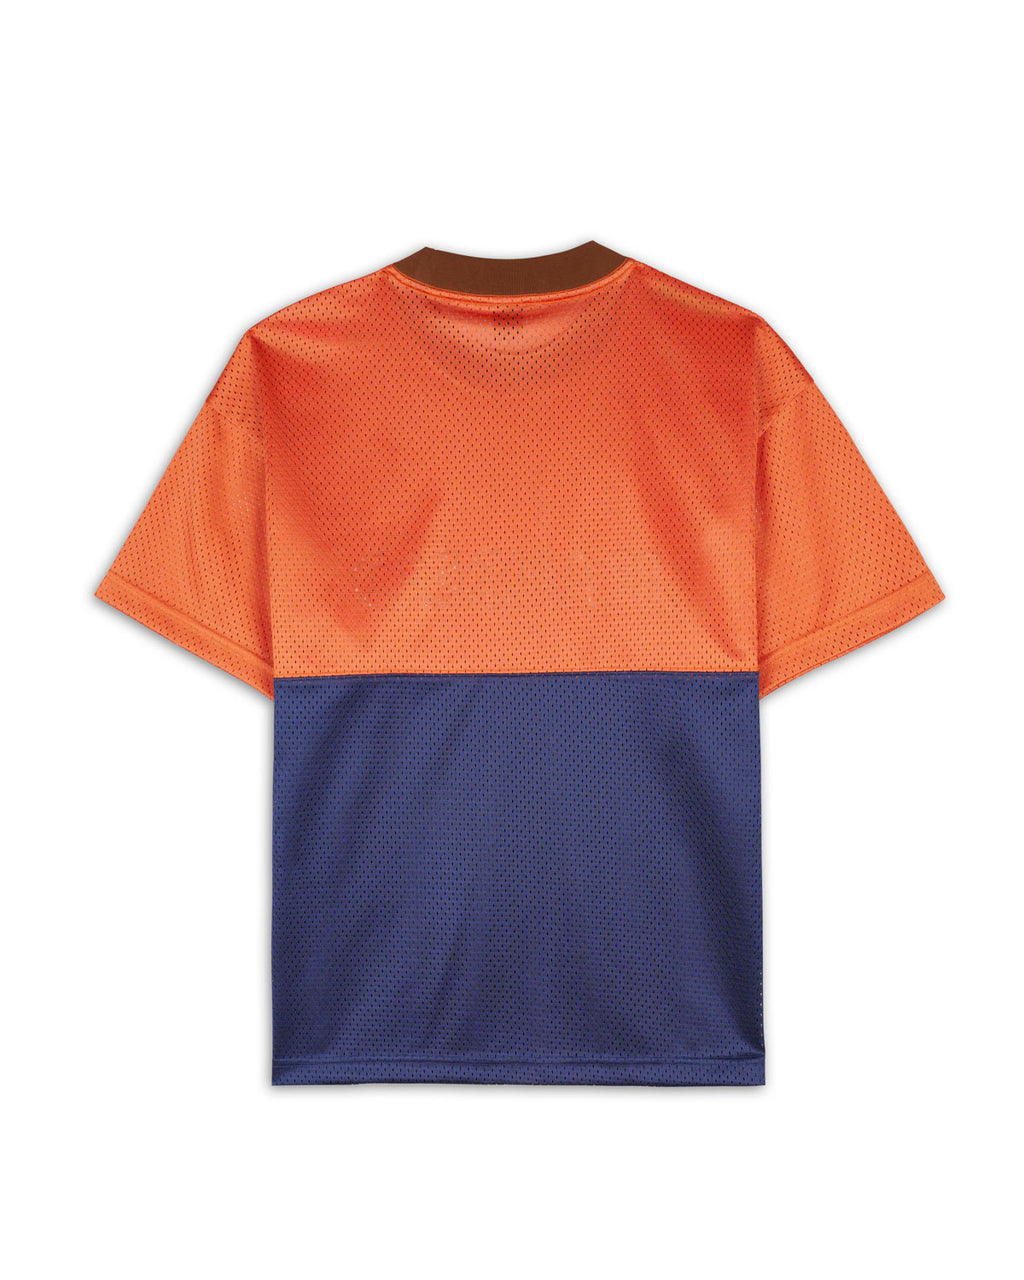 Maze Football Mesh Shirt - Orange/Navy 2